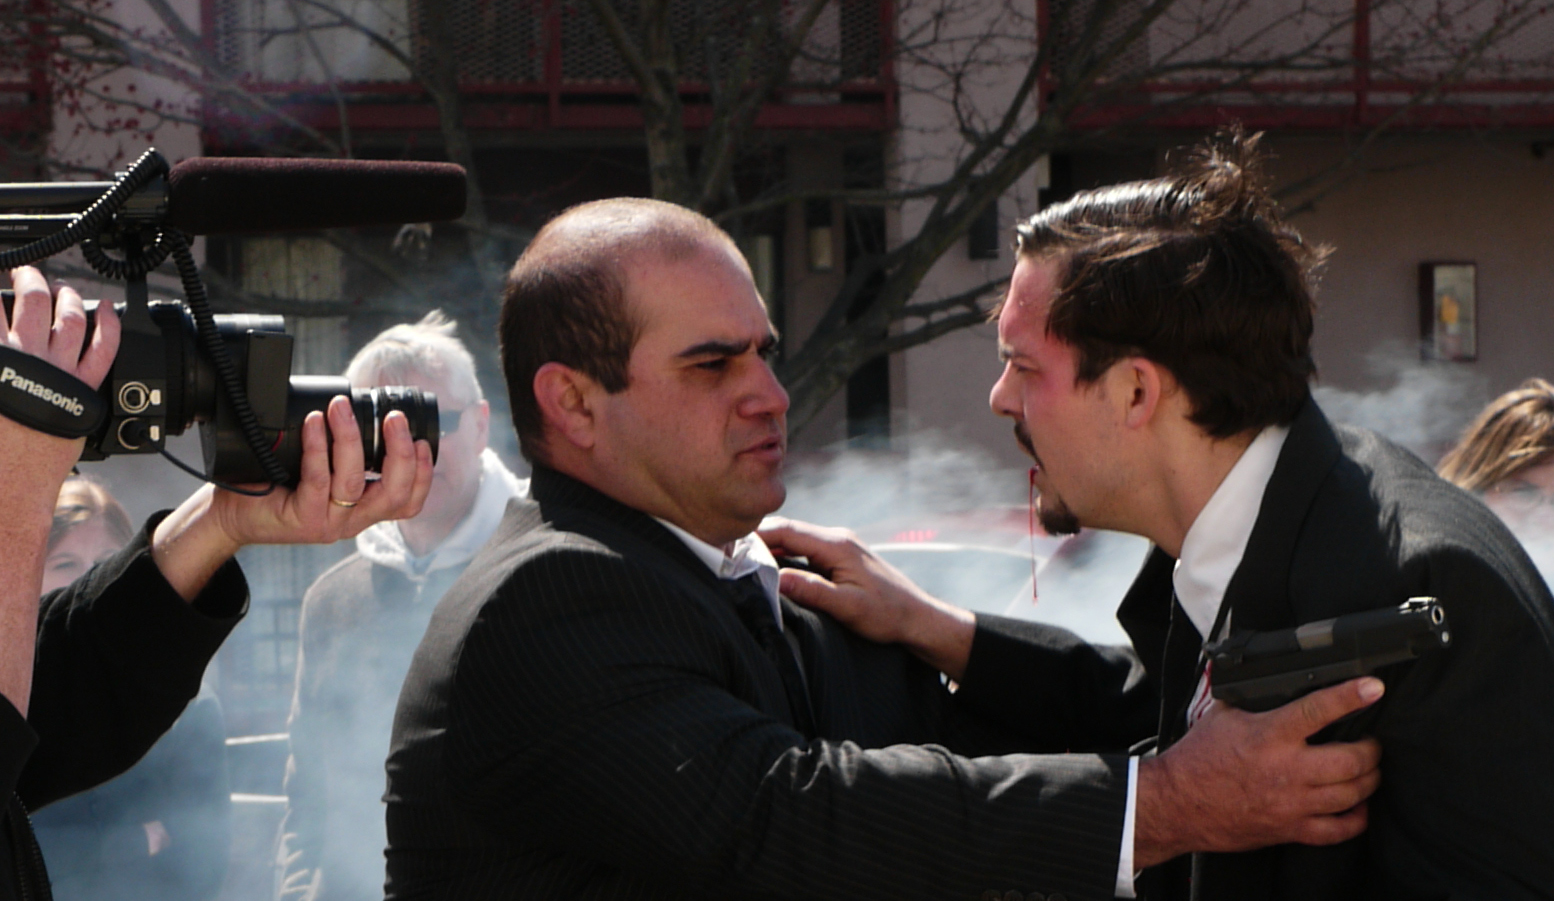 Frank (Jason Garcia) and Agent Quick (Cory Boughton) in David Saich's 2010 Scapegoat